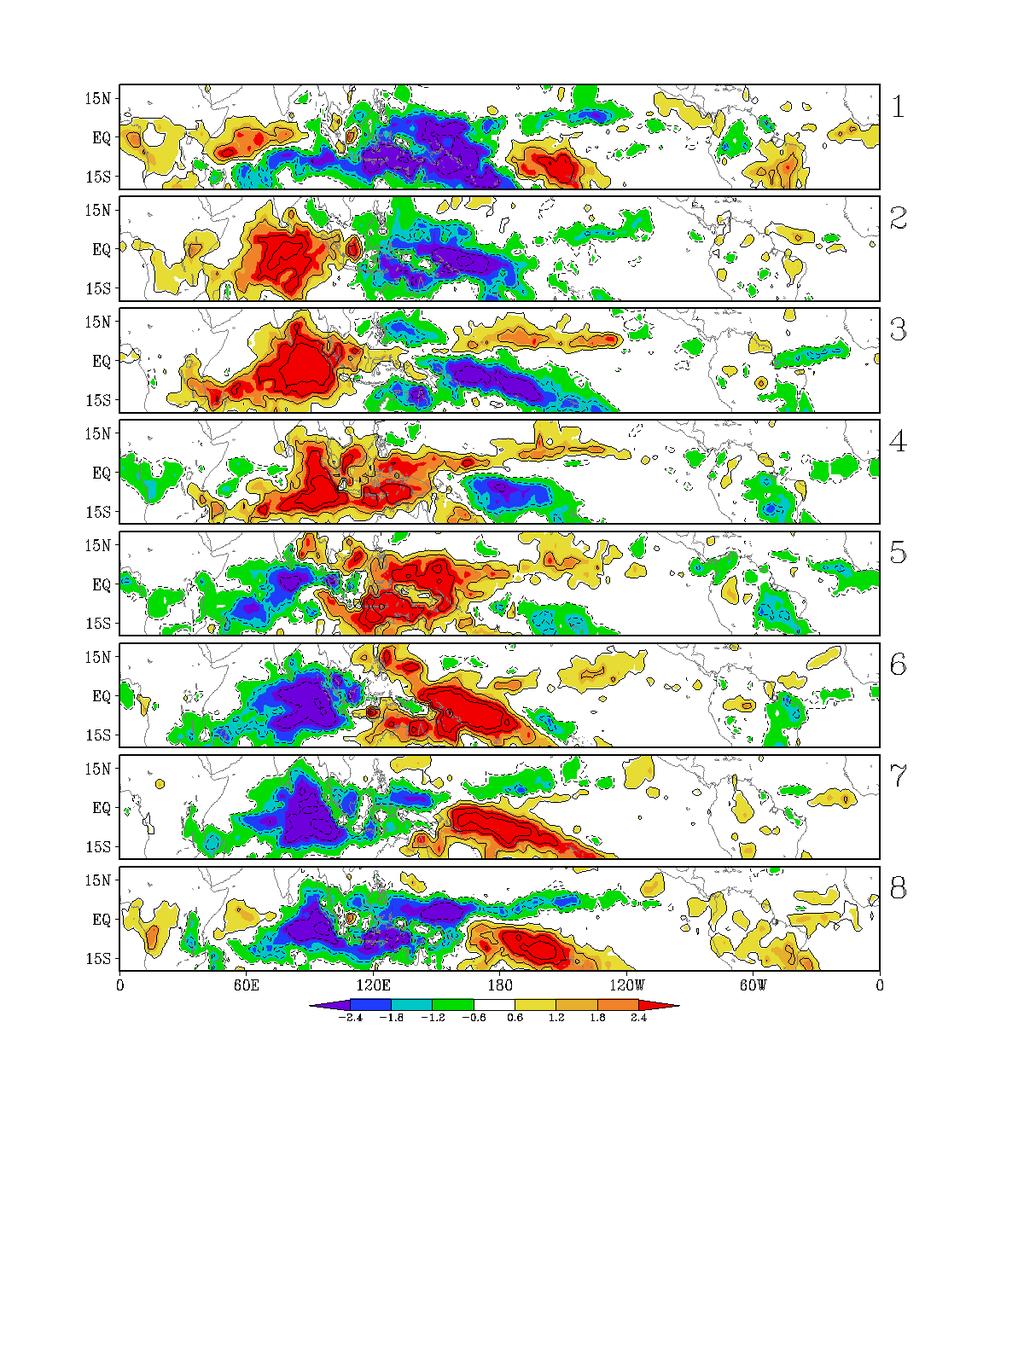 Composites of tropical Precipitation rate for 8